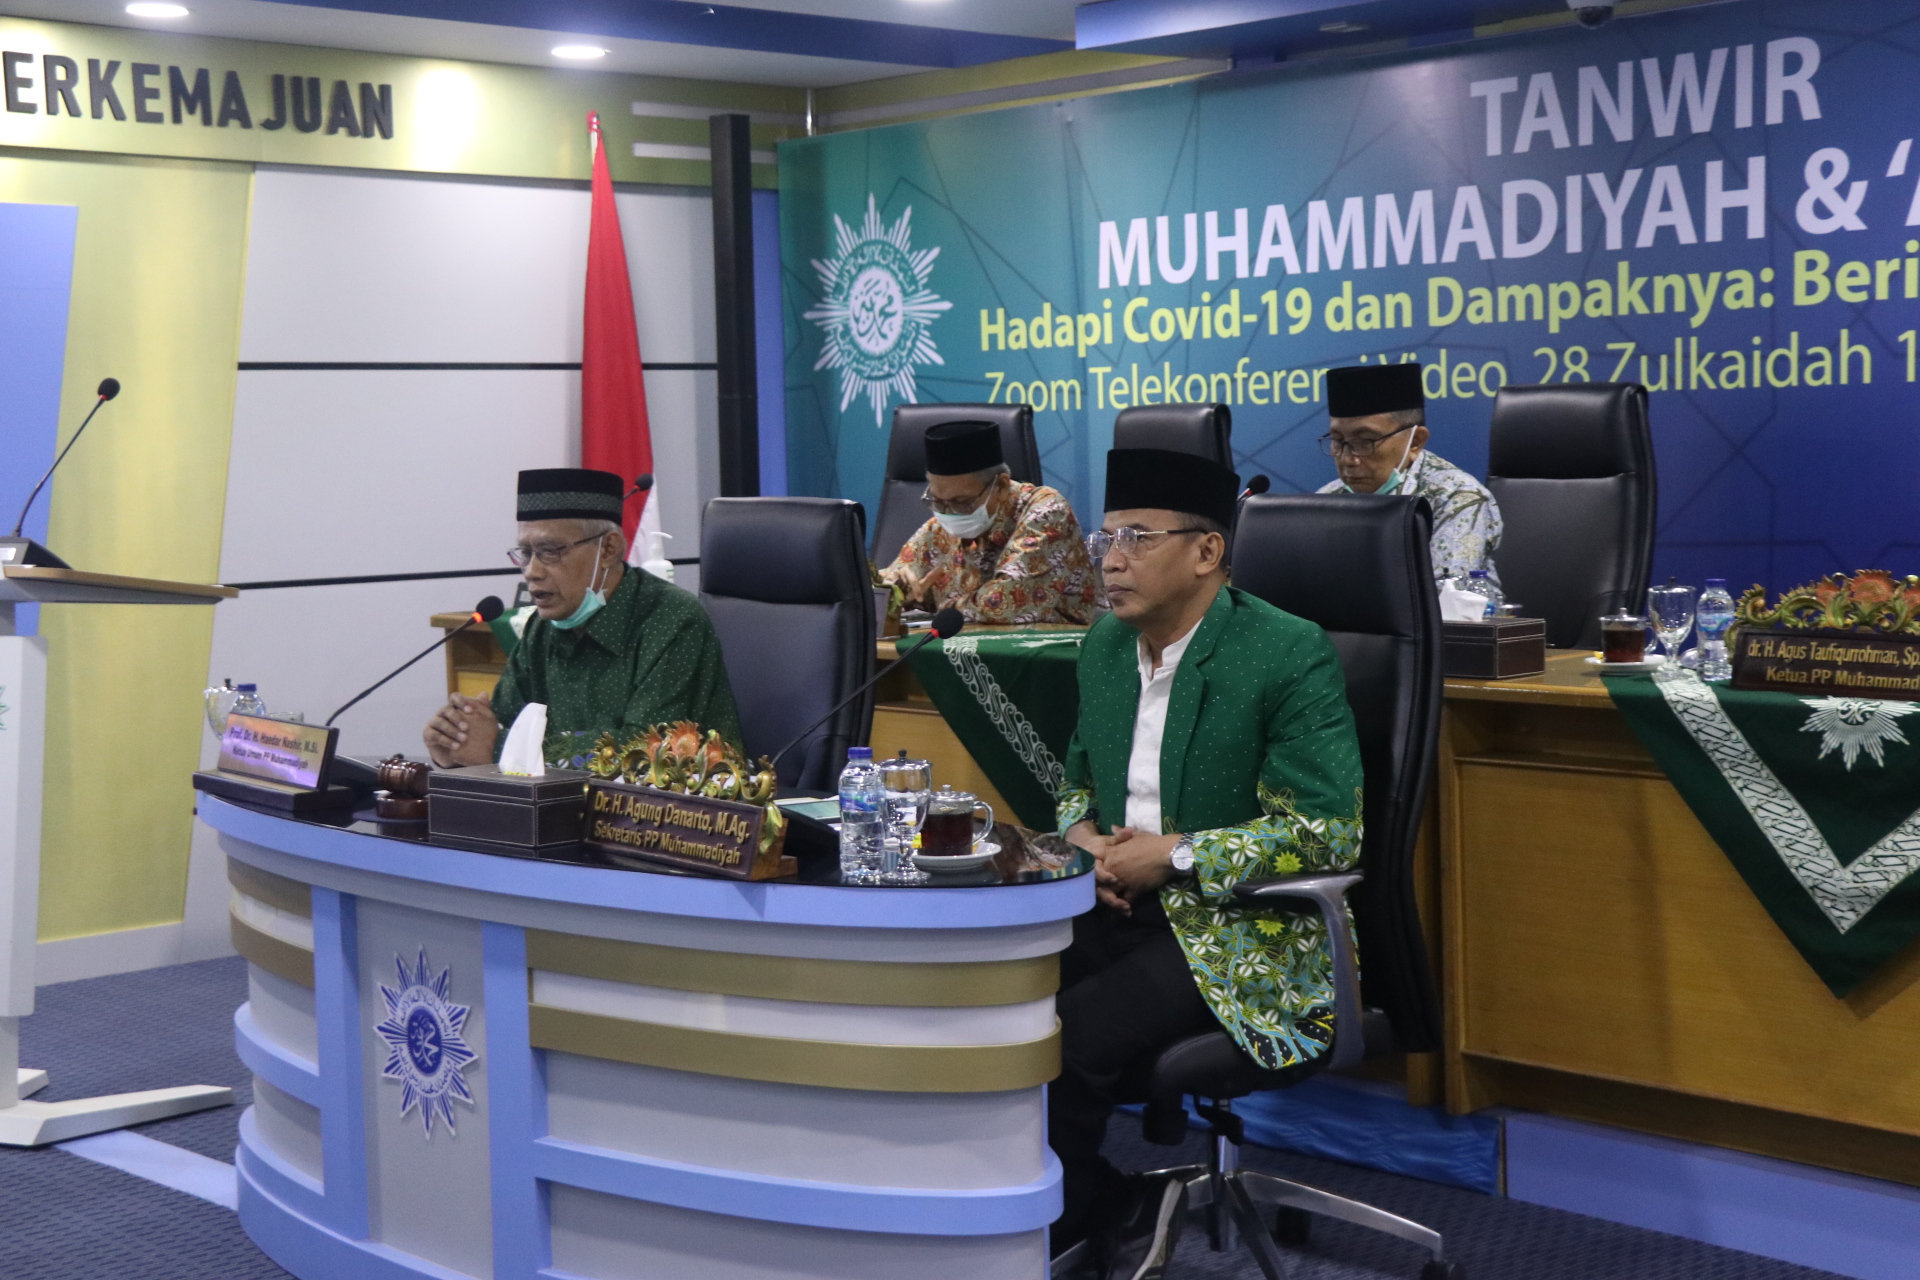 Sidang Tanwir Muhammadiyah dipimpin Haedar Nashir. (Foto: md.or.id)